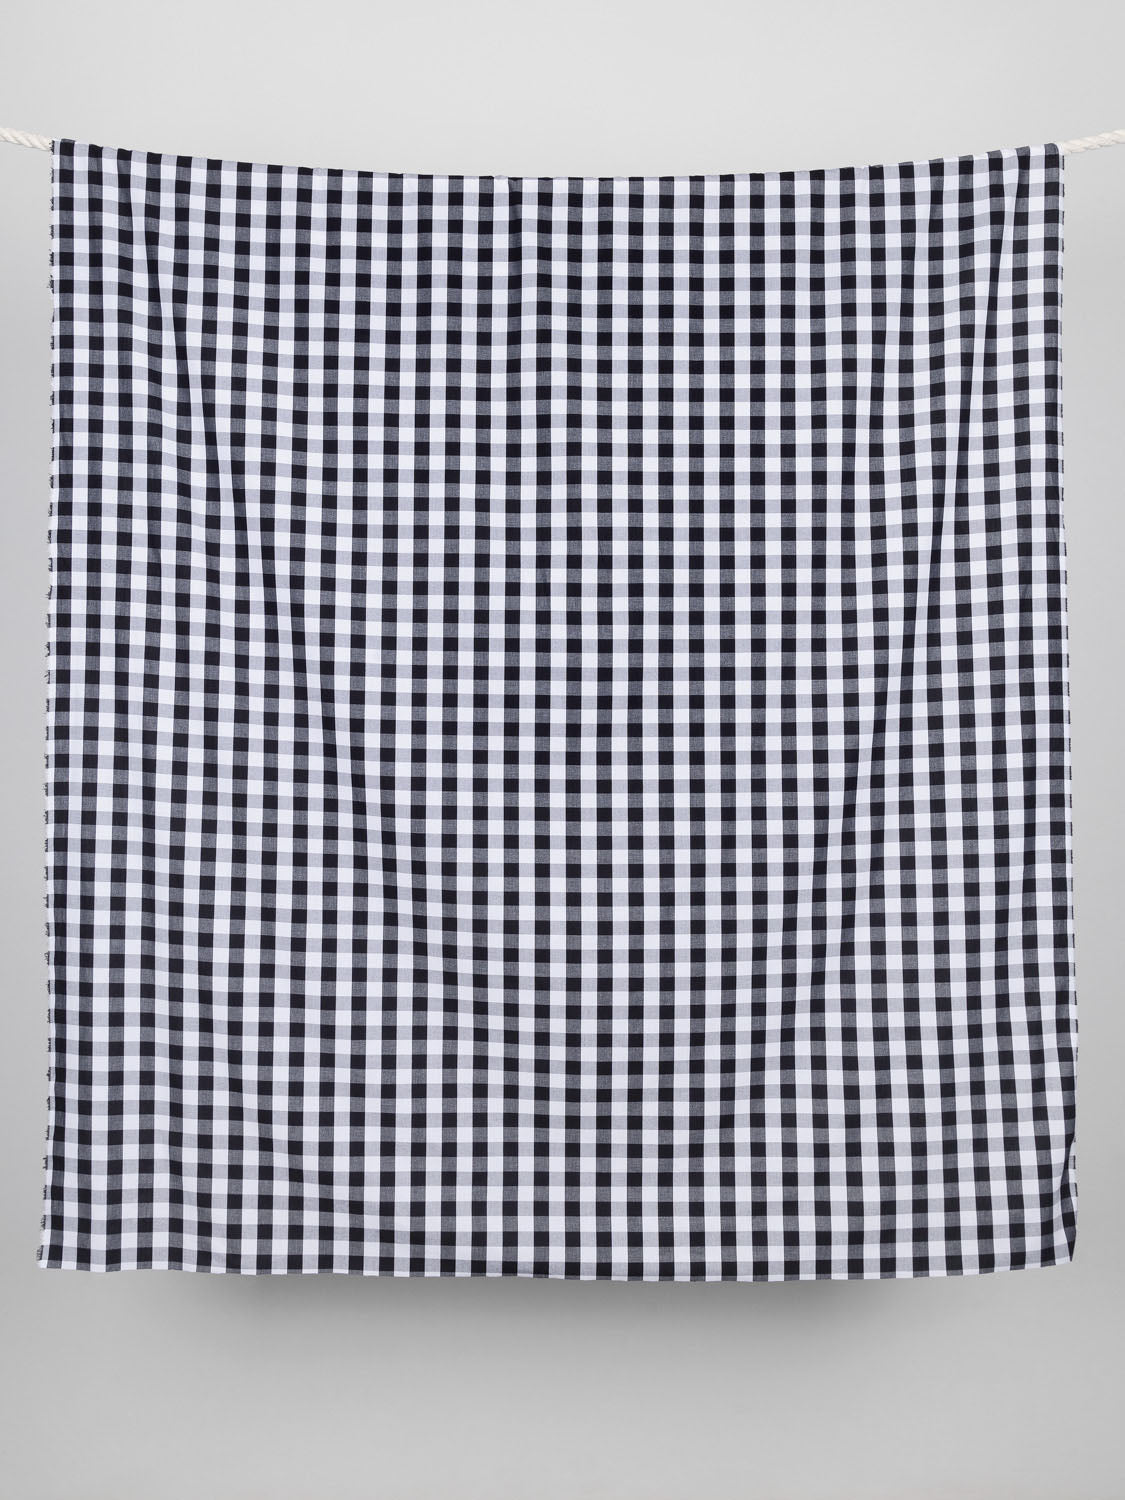 Large Scale Yarn-Dyed Gingham Cotton - Black + White